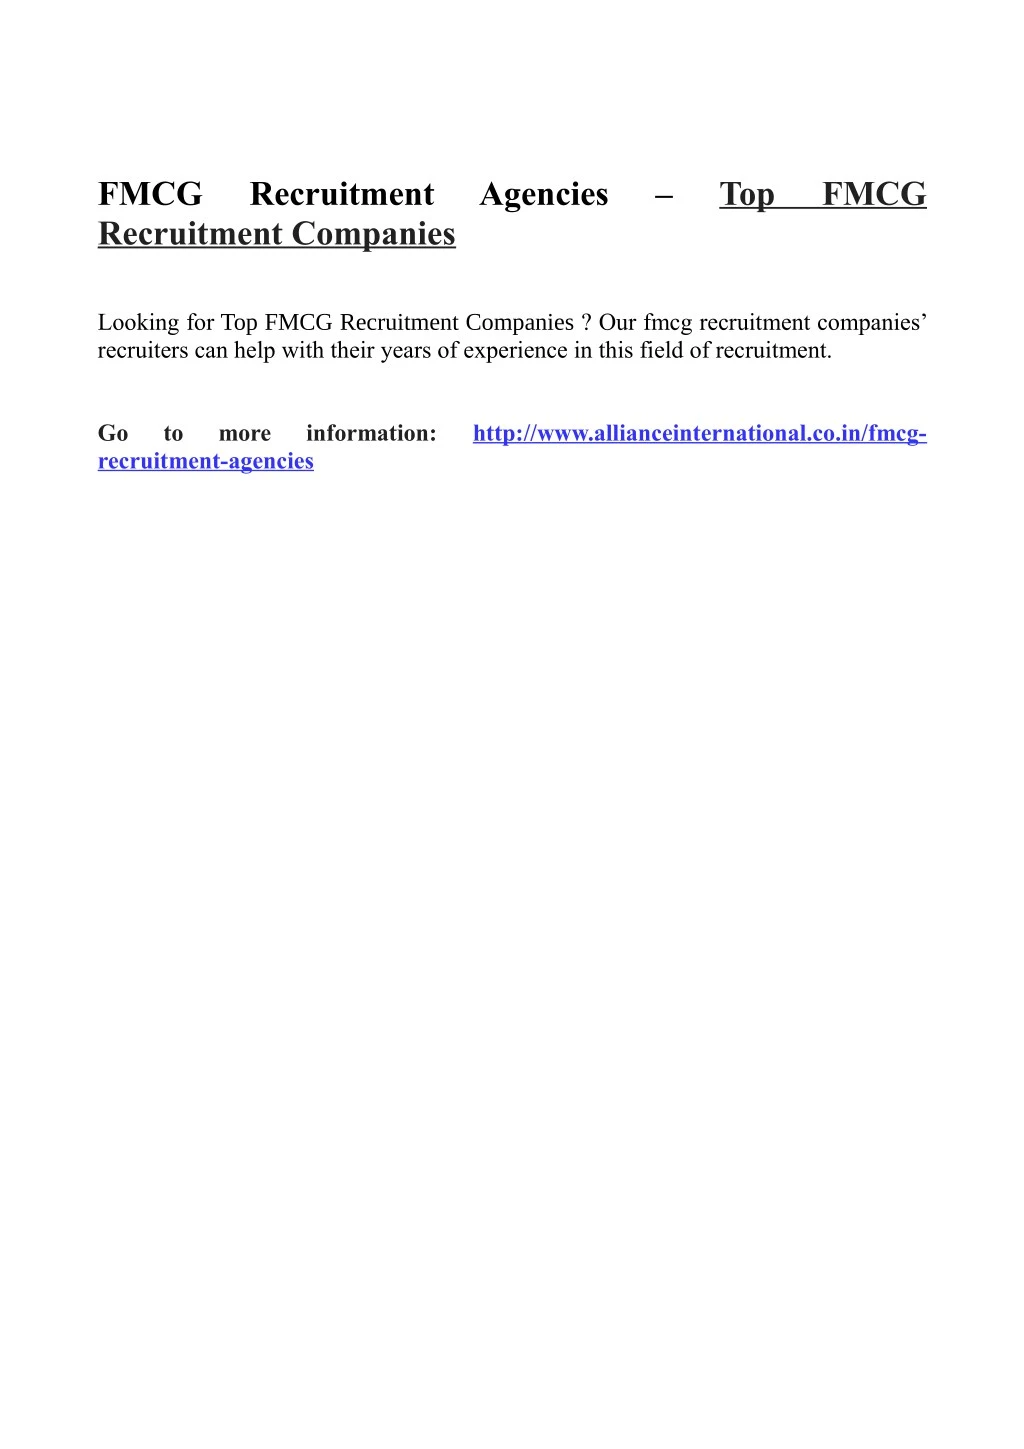 fmcg recruitment agencies recruitment companies